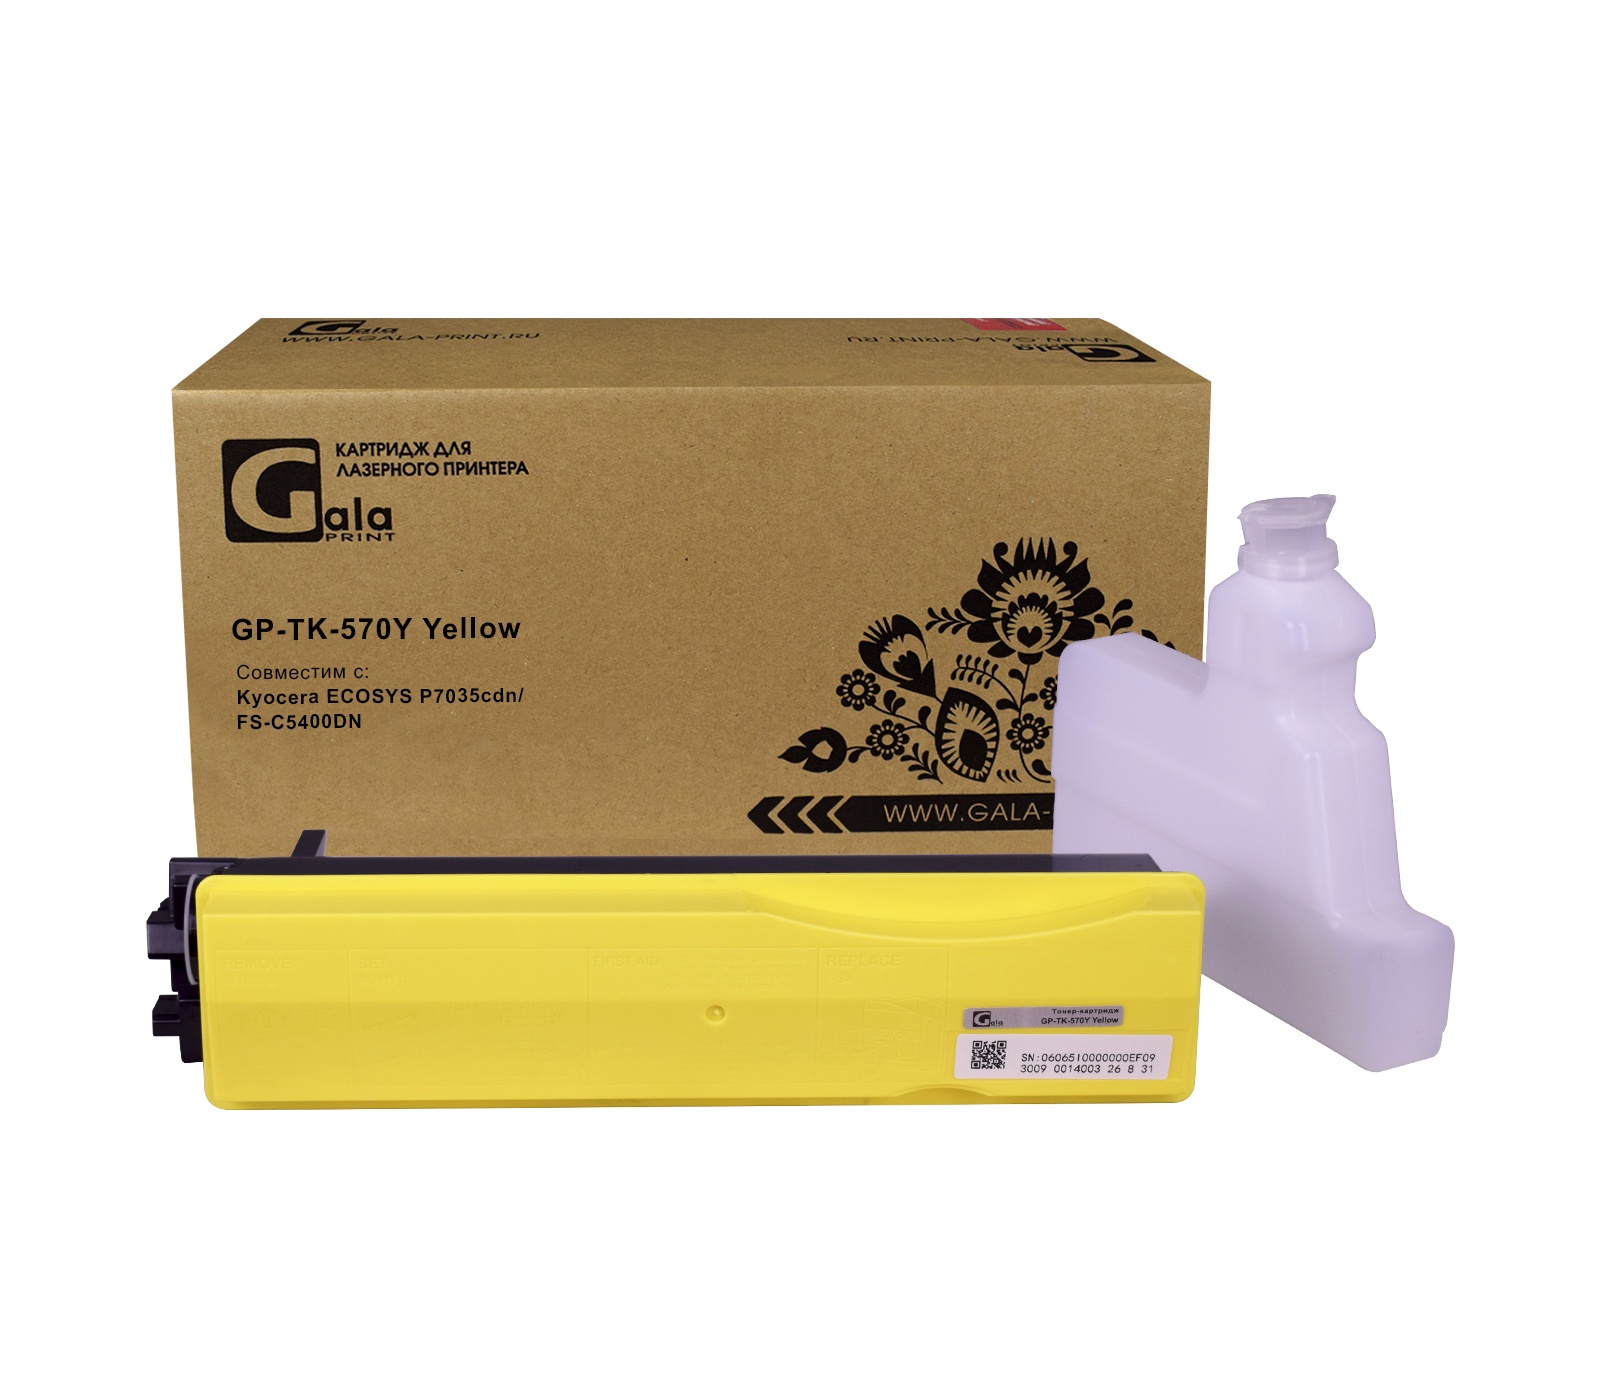 Тонер-туба GP-TK-570Y для принтеров Kyocera ECOSYS P7035cdn/FS-C5400DN с бункером отработанного тонера Yellow 12000 копий GalaPrint